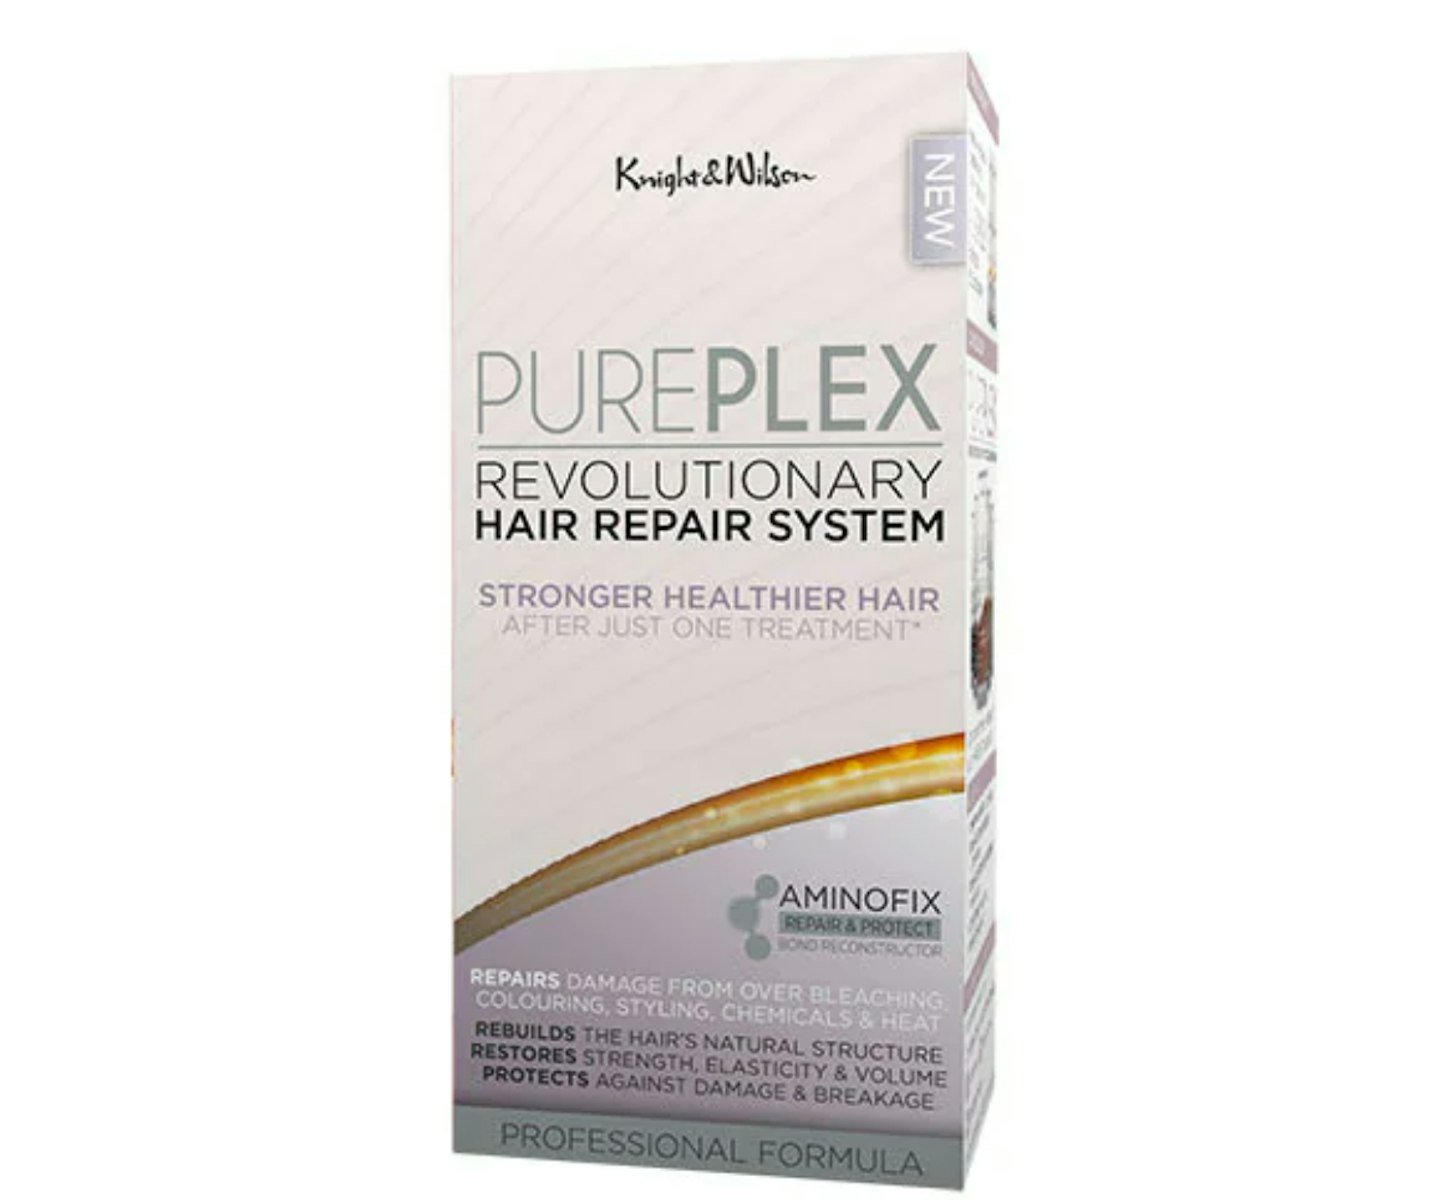 PurePlex Revolutionary Hair Repair System